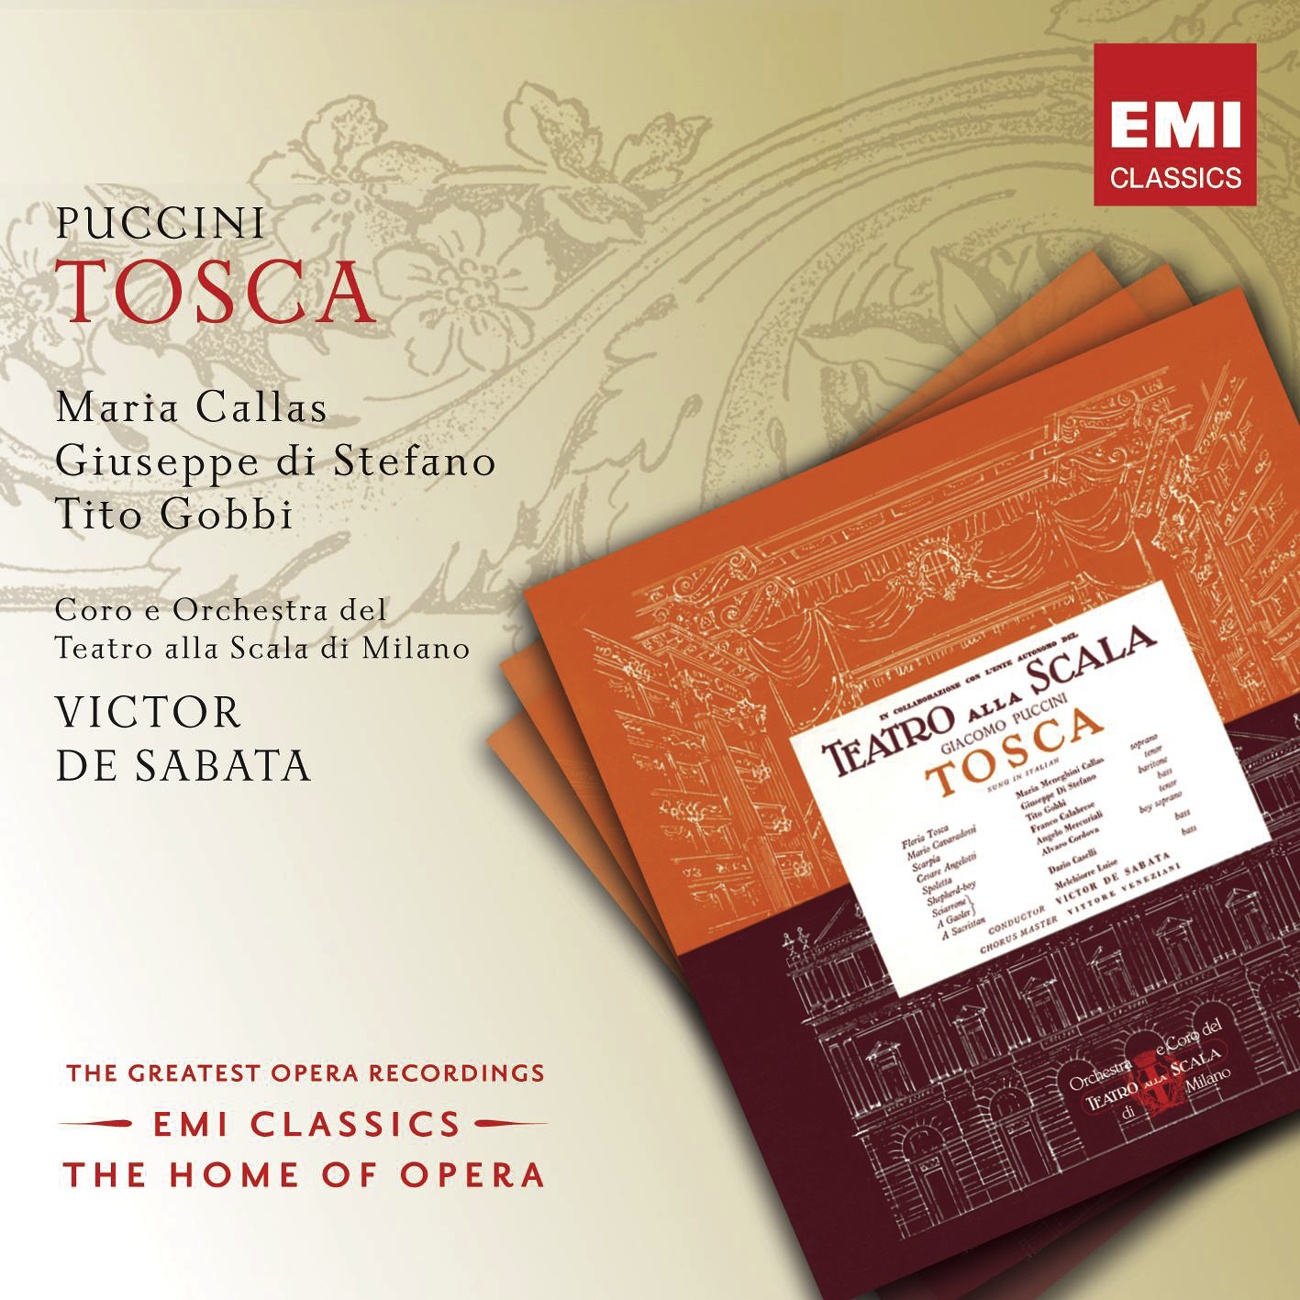 Tosca (2002 Digital Remaster), ACT THREE: Largo...(Orchestra)....Mario Cavaradossi? A voi...(Carceriere/Cavaradossi)...Meno (Orchestra)